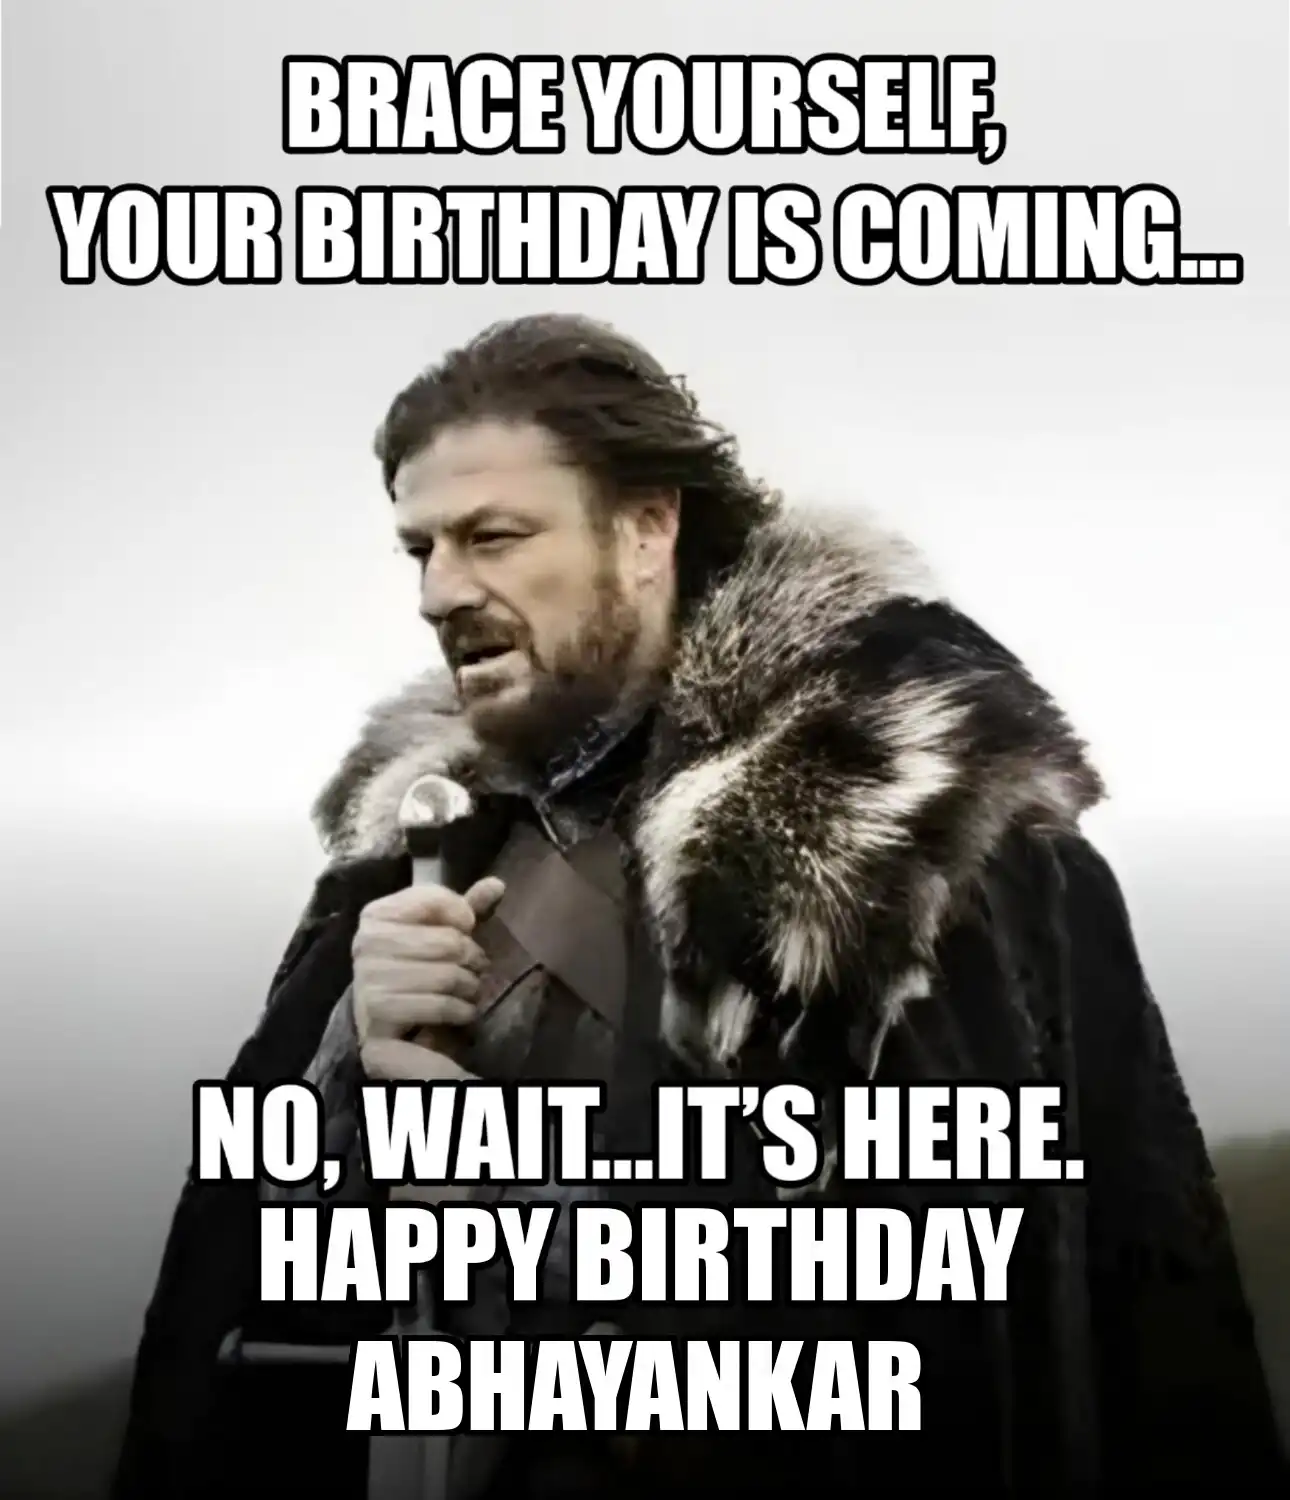 Happy Birthday Abhayankar Brace Yourself Your Birthday Is Coming Meme